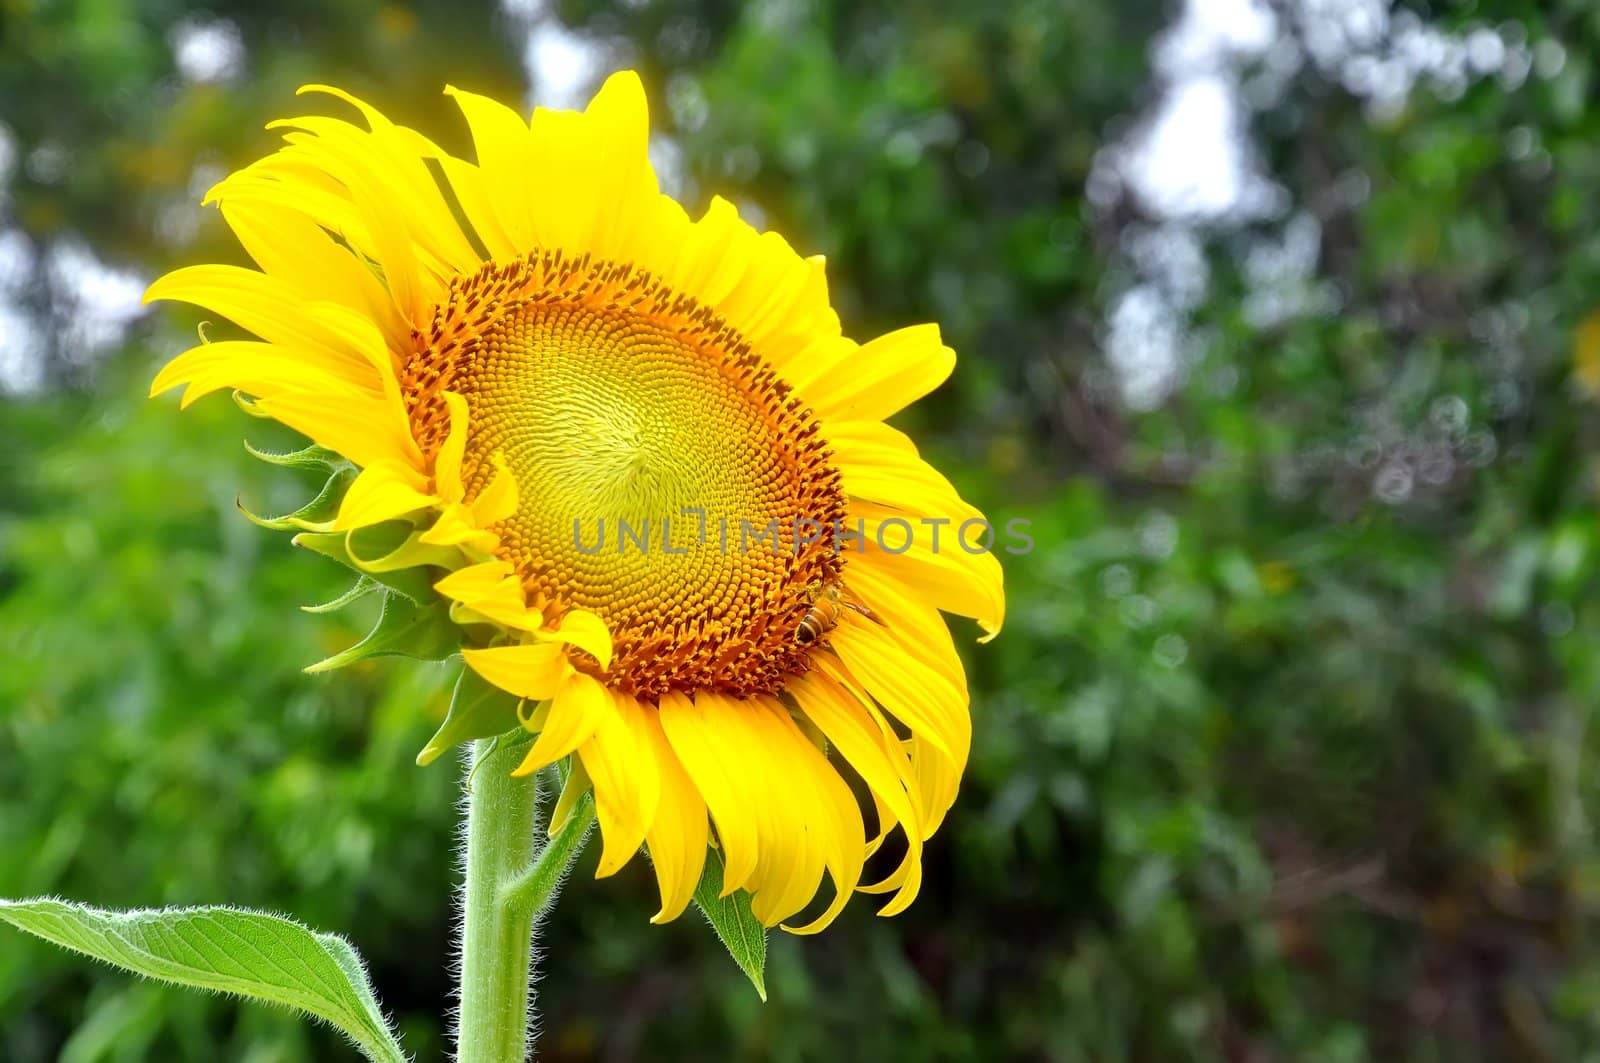 Beautiful sunflowers in the field